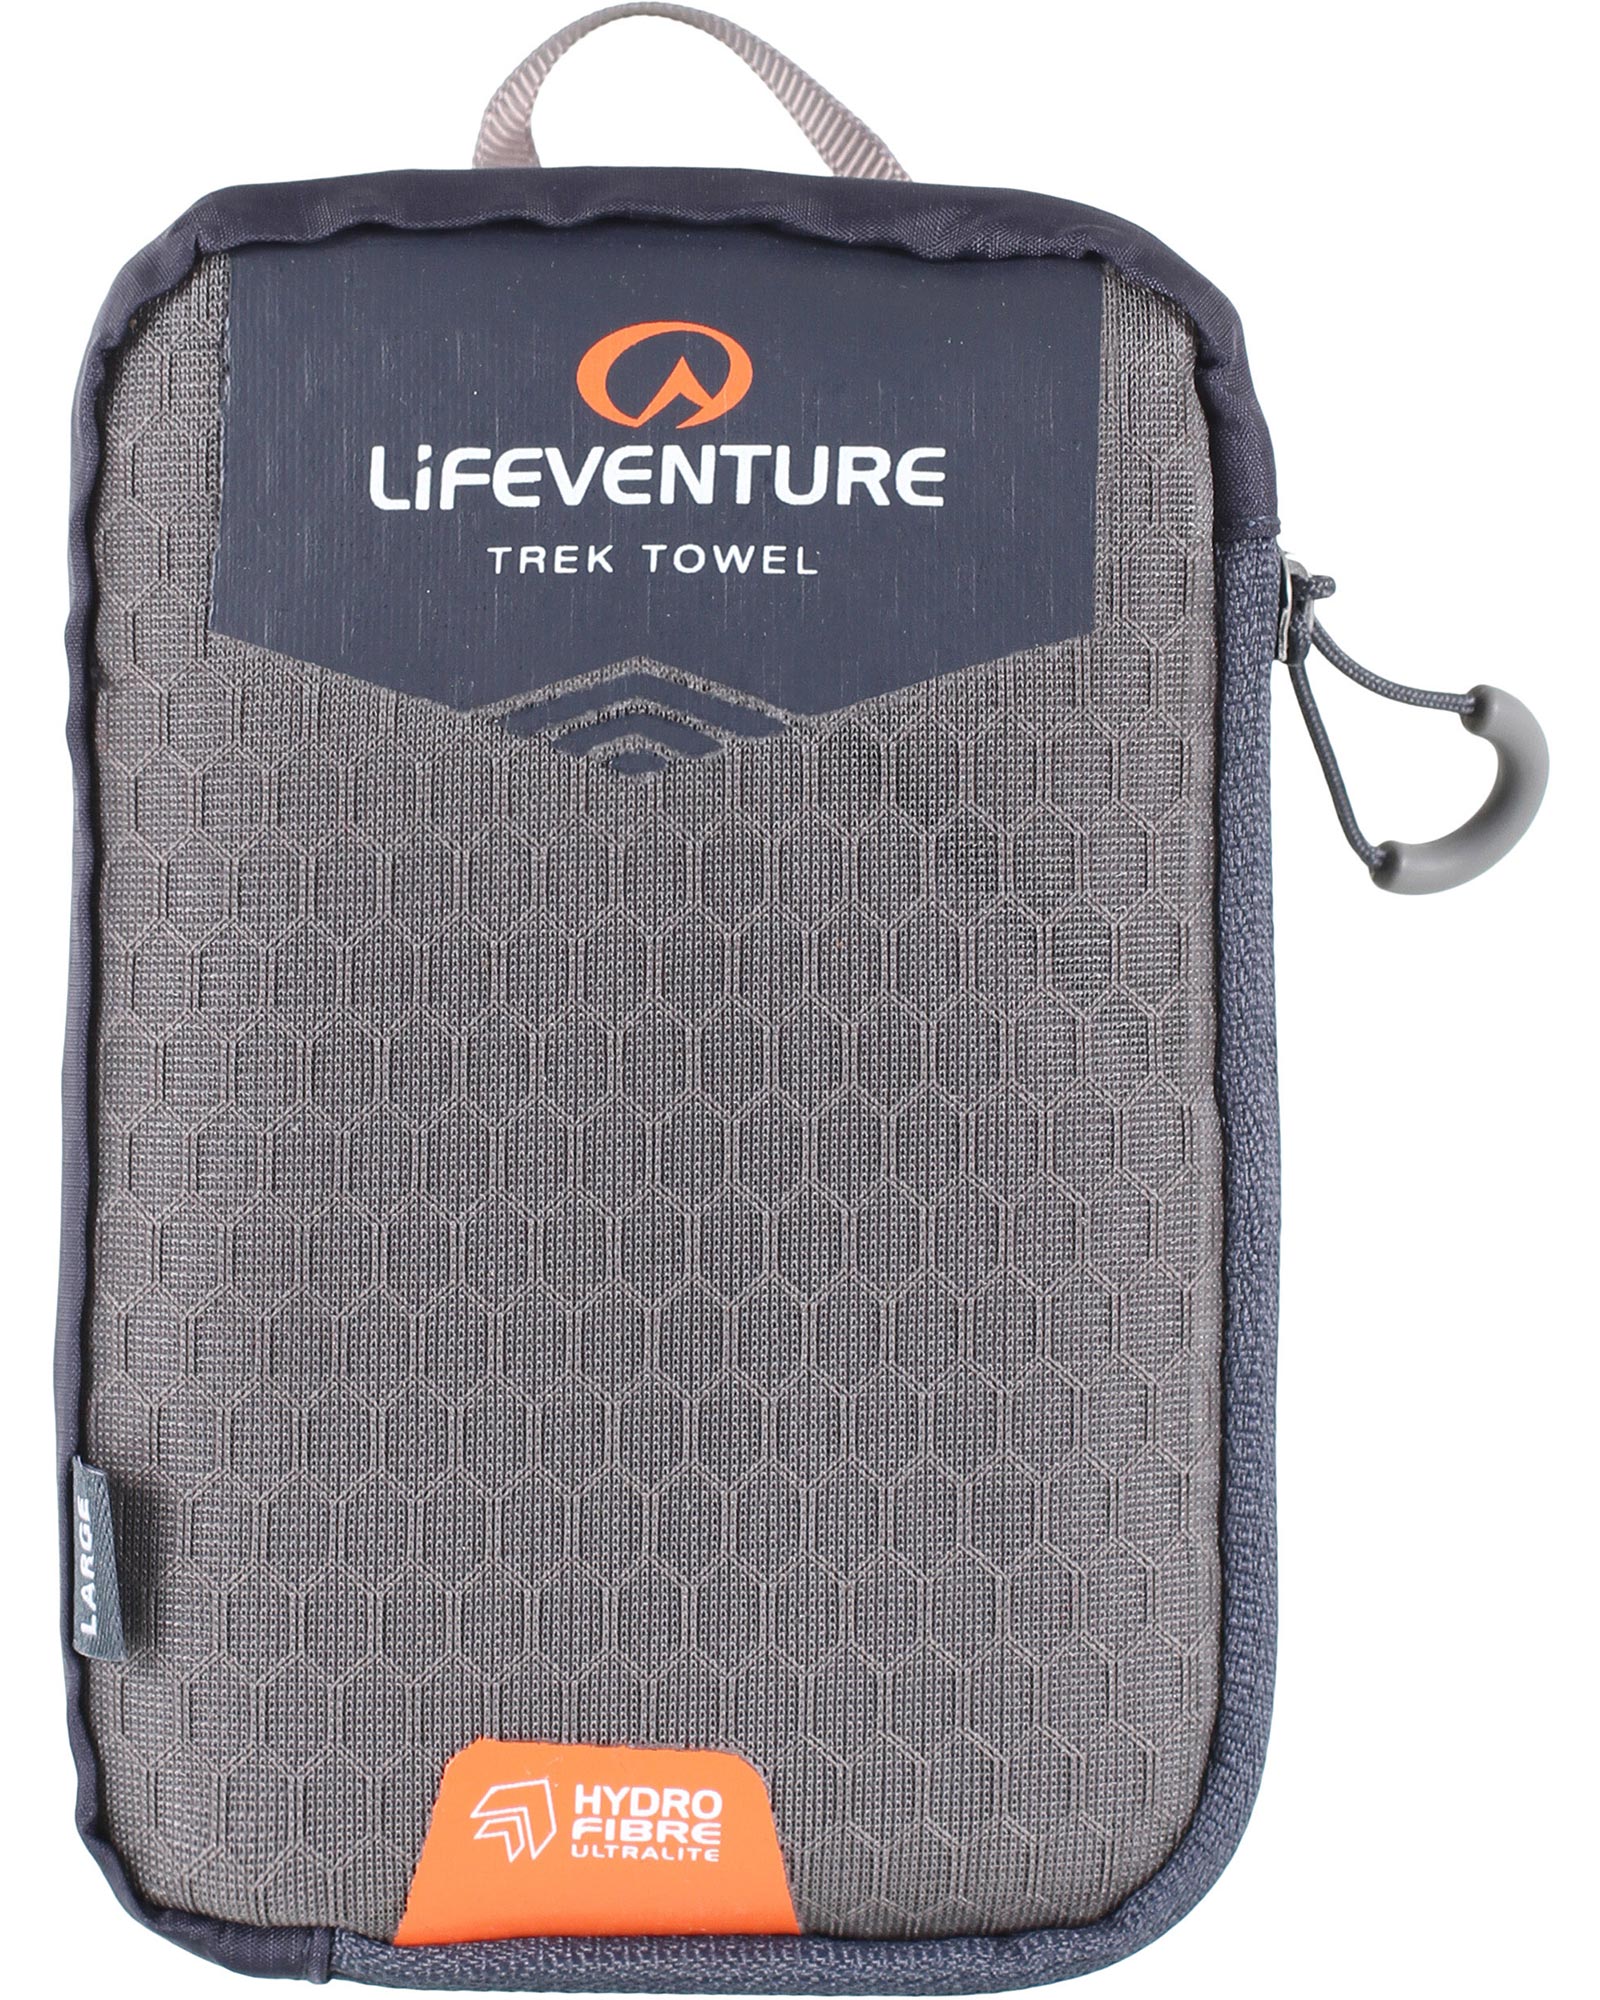 Lifeventure HydroFibre Trek Towel   Large - Grey